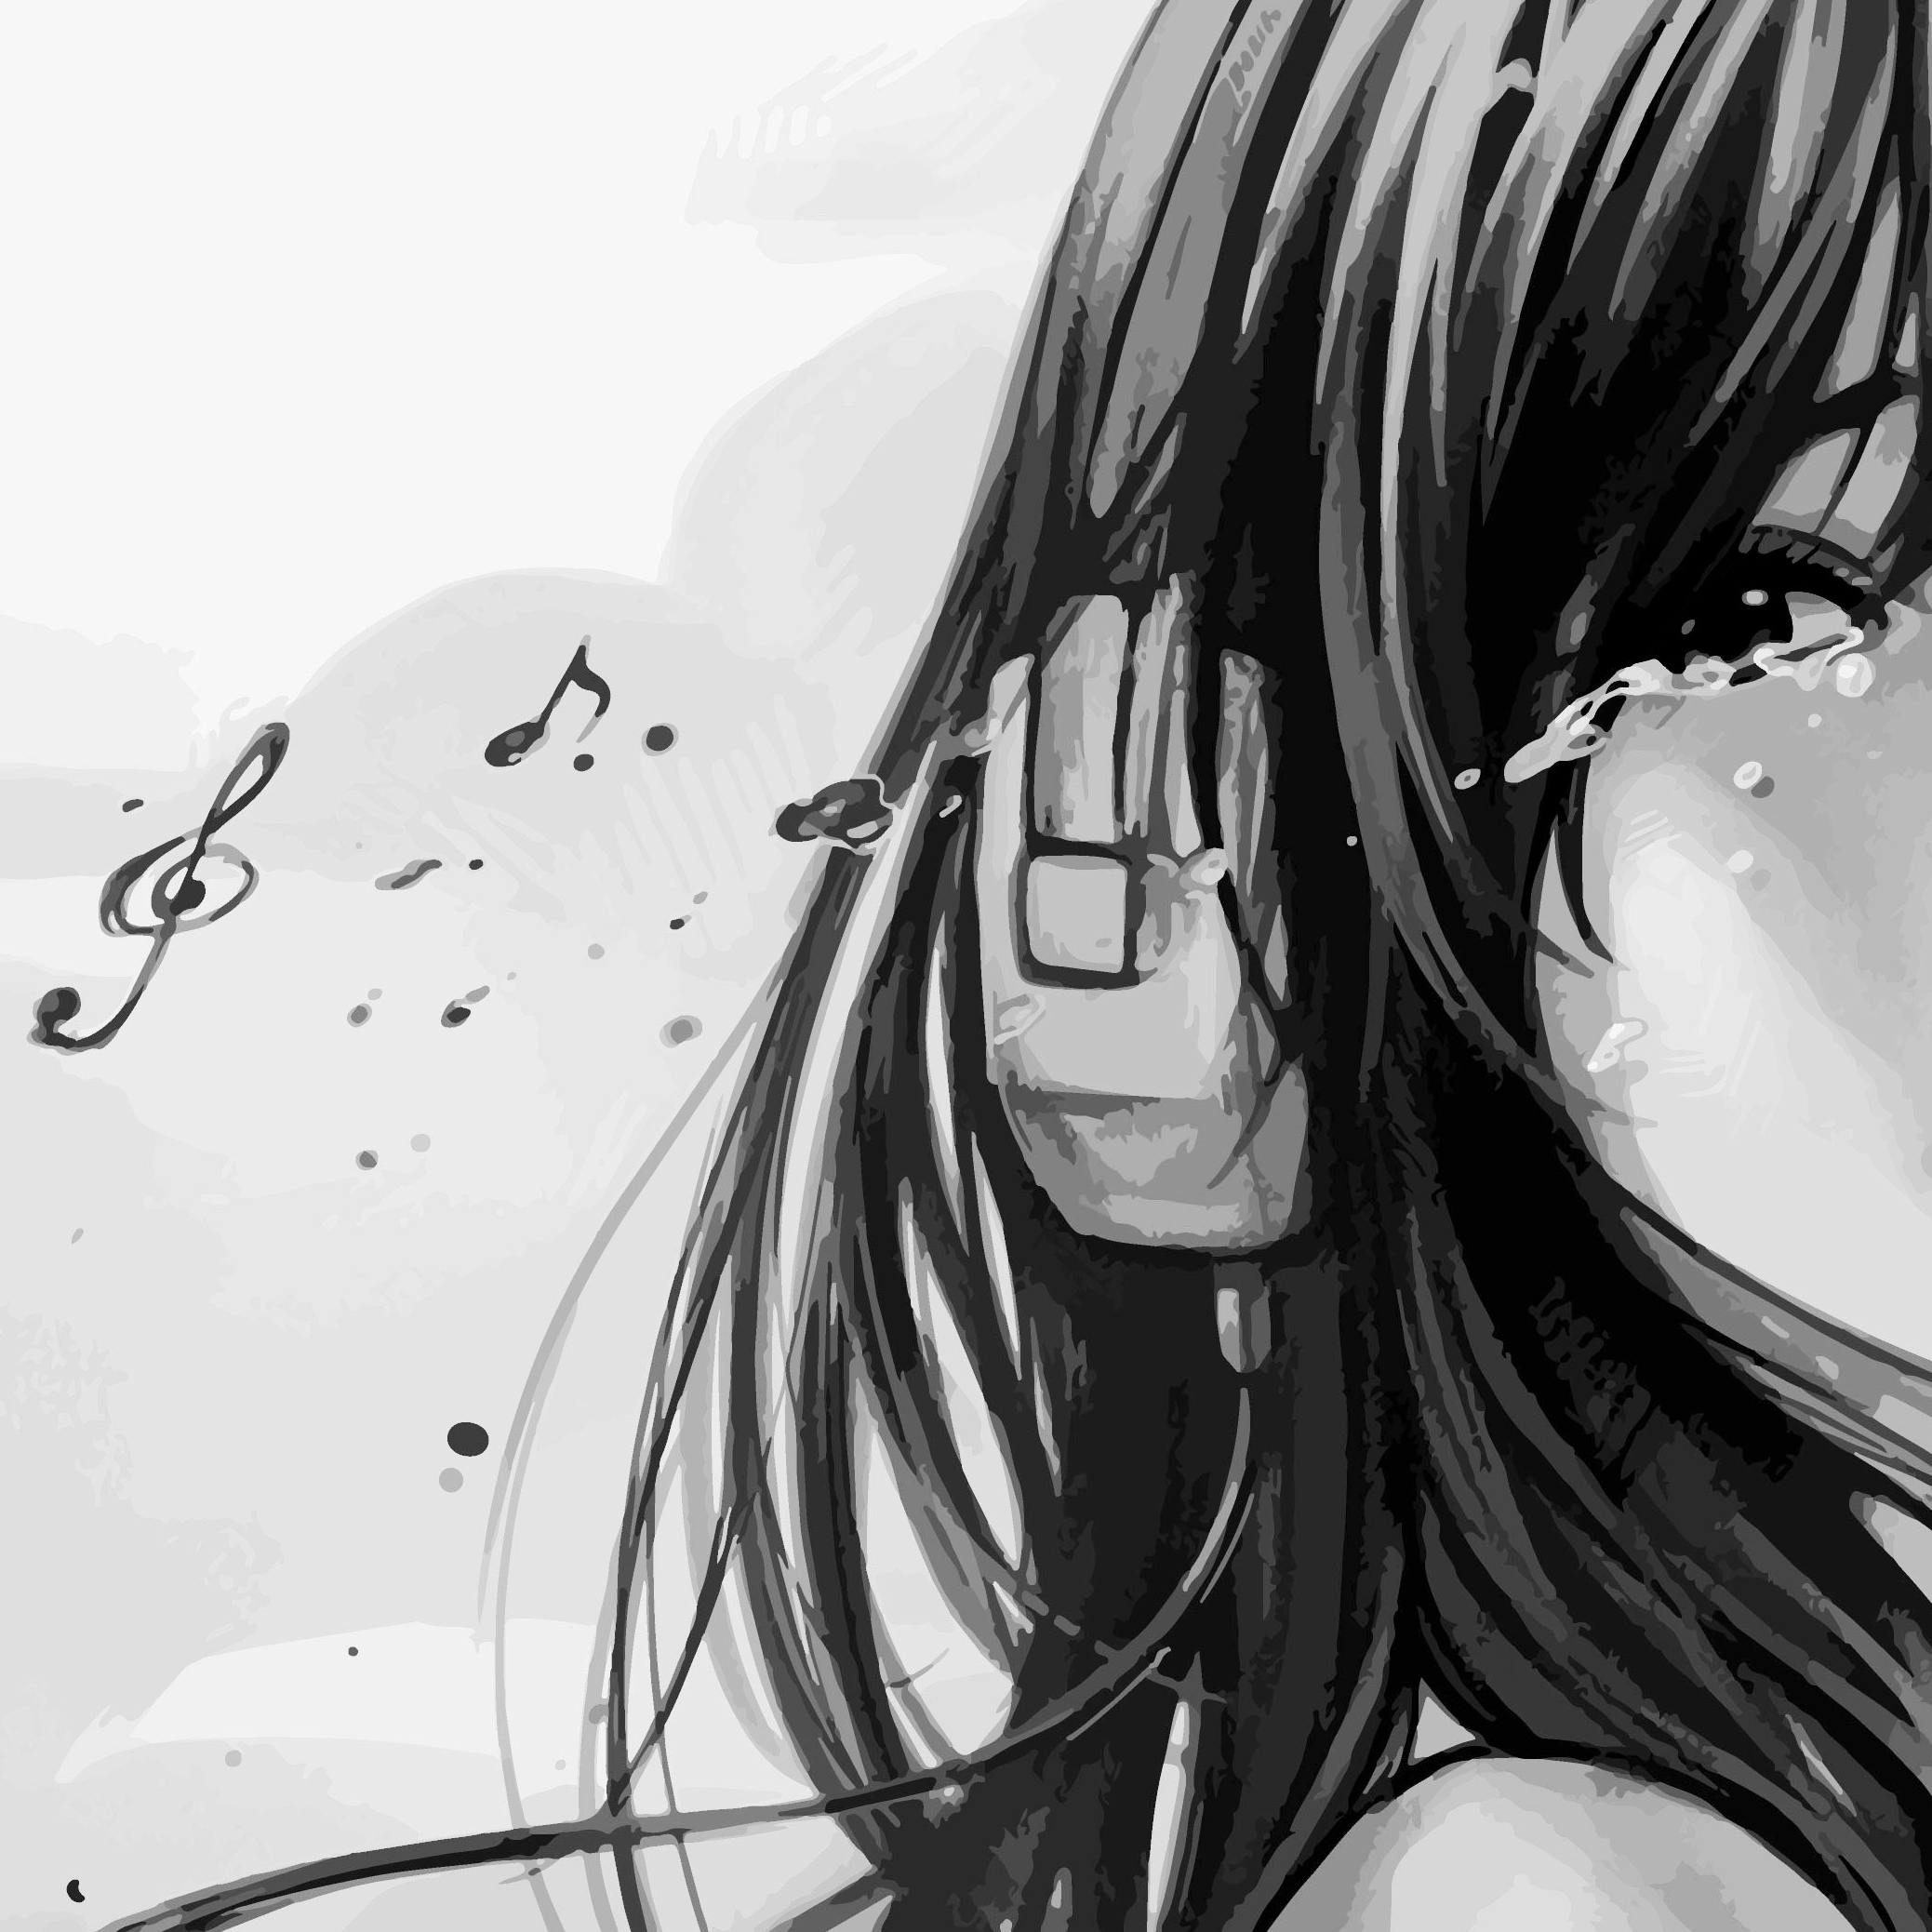 Sad Anime Girl With Headphones